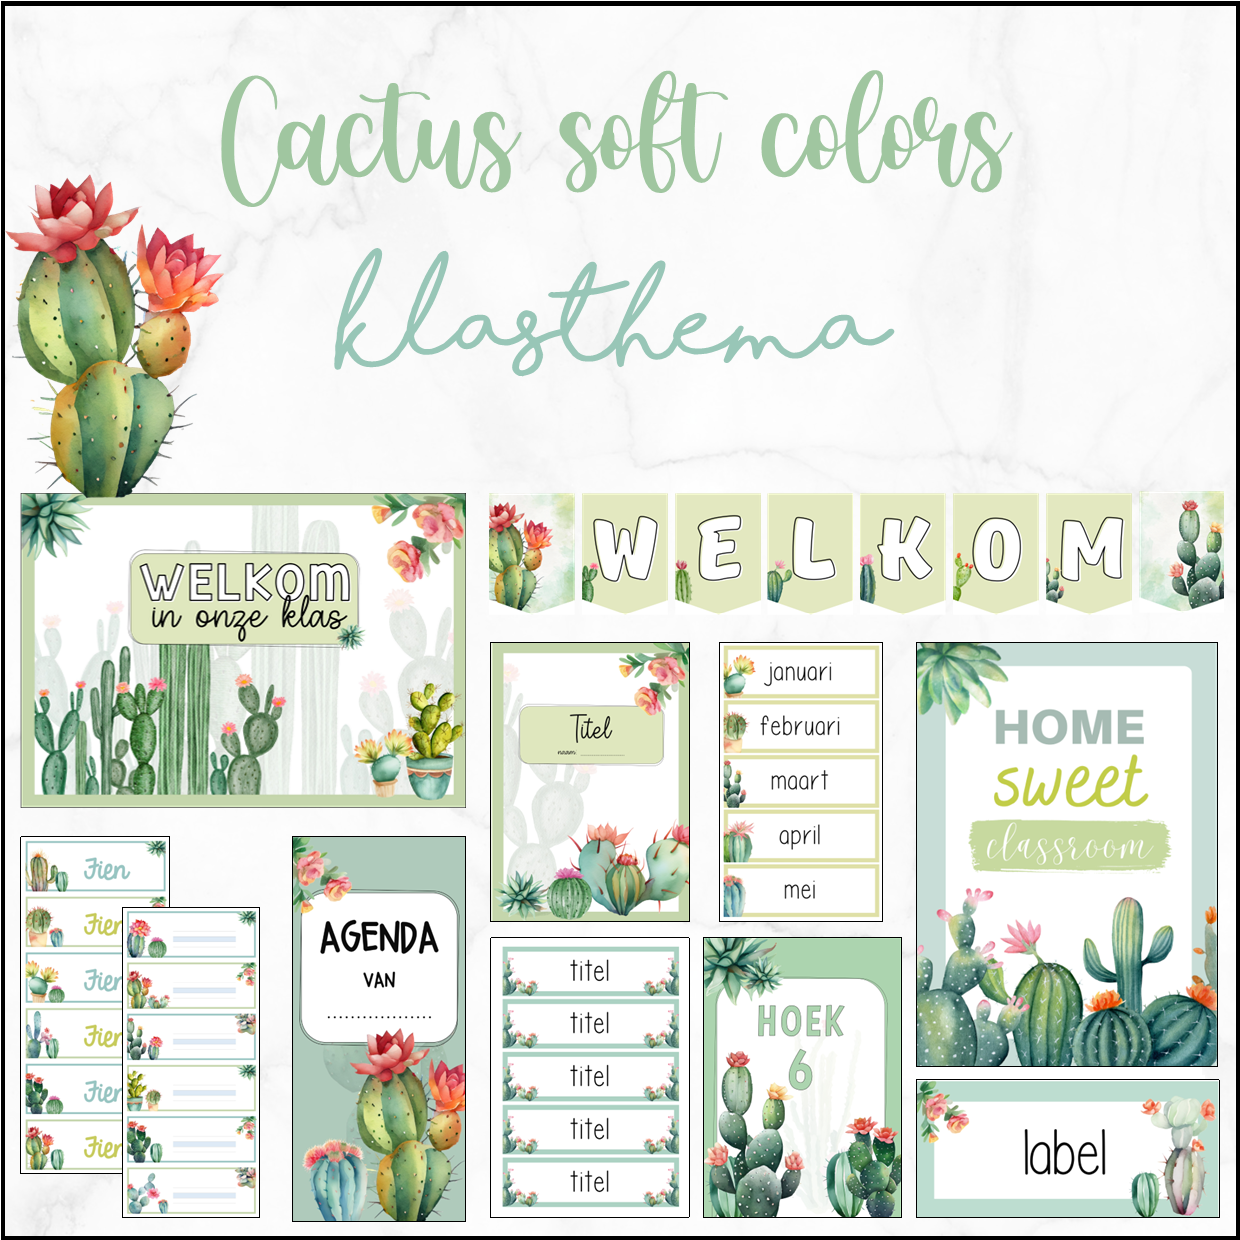 Klasthema cactus soft colors